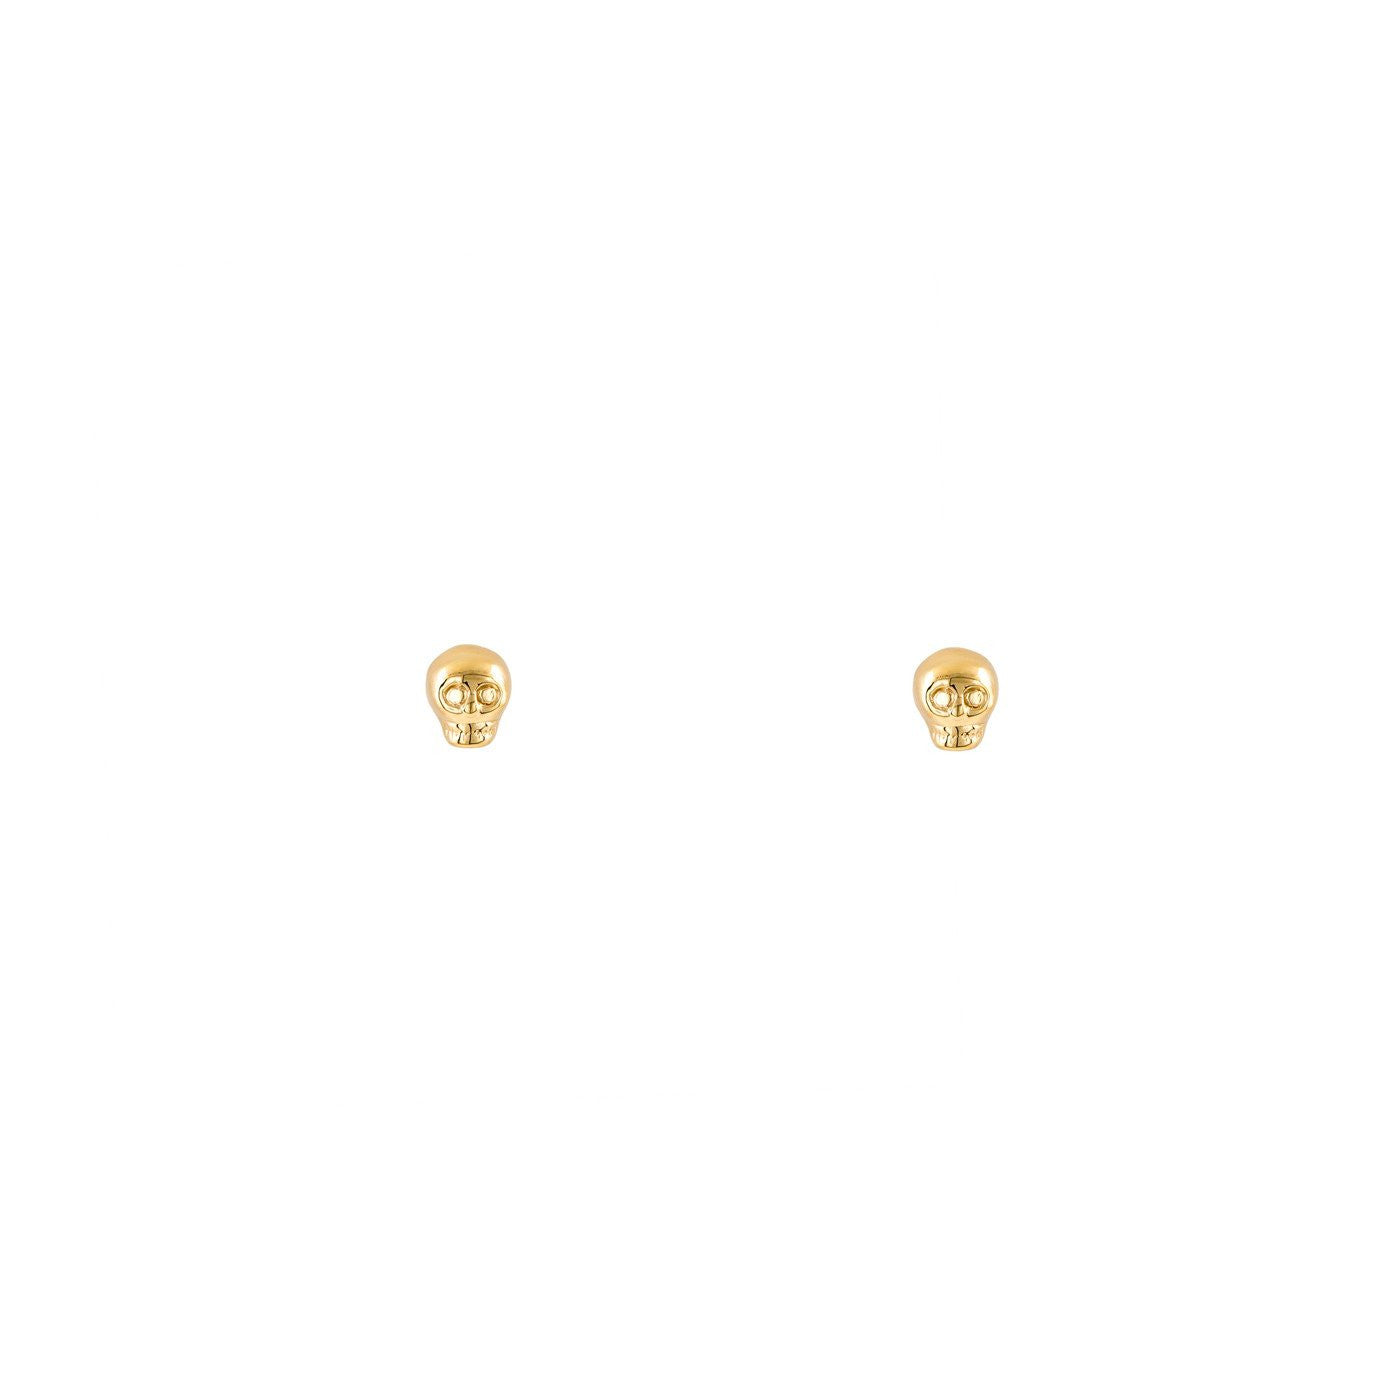 gold skull stud earrings PRE 427 14KY_bdf69658 5fa9 44c8 9499 8cf1c56c4904